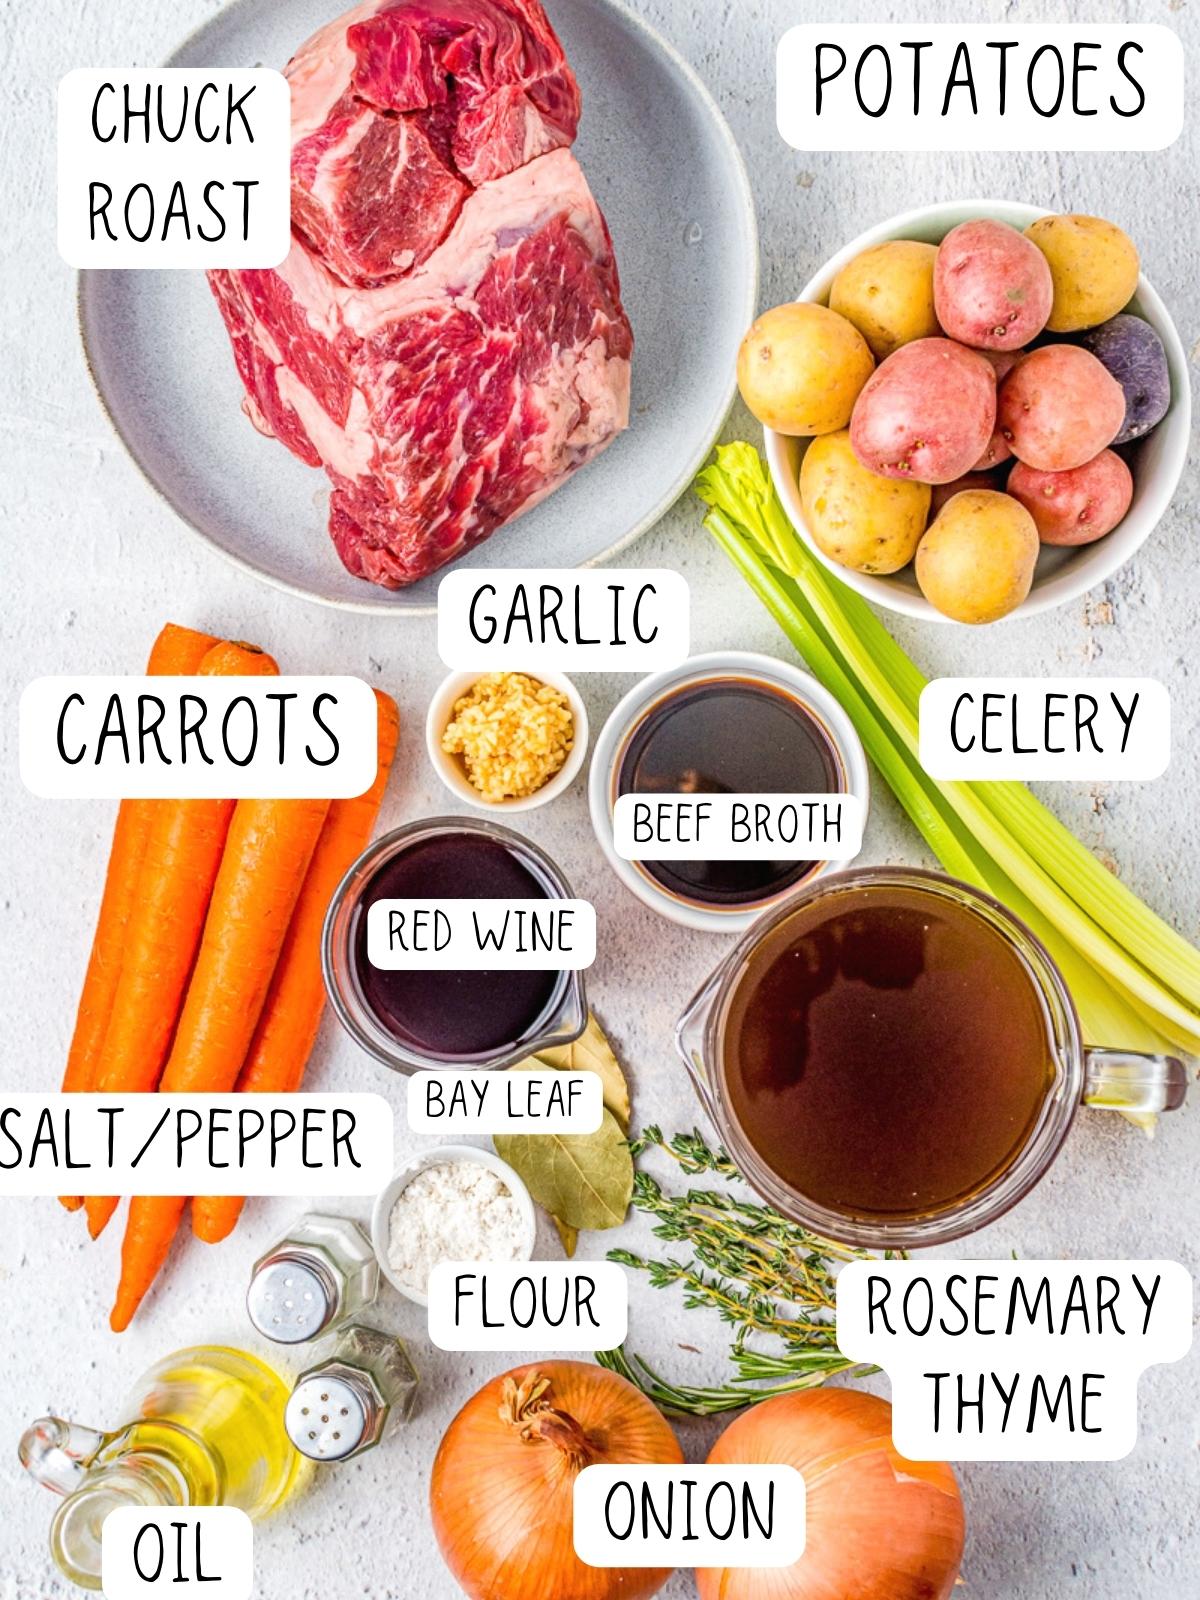 pot roast ingredients, including potatoes, chuck roast, garlic, carrots, and celery